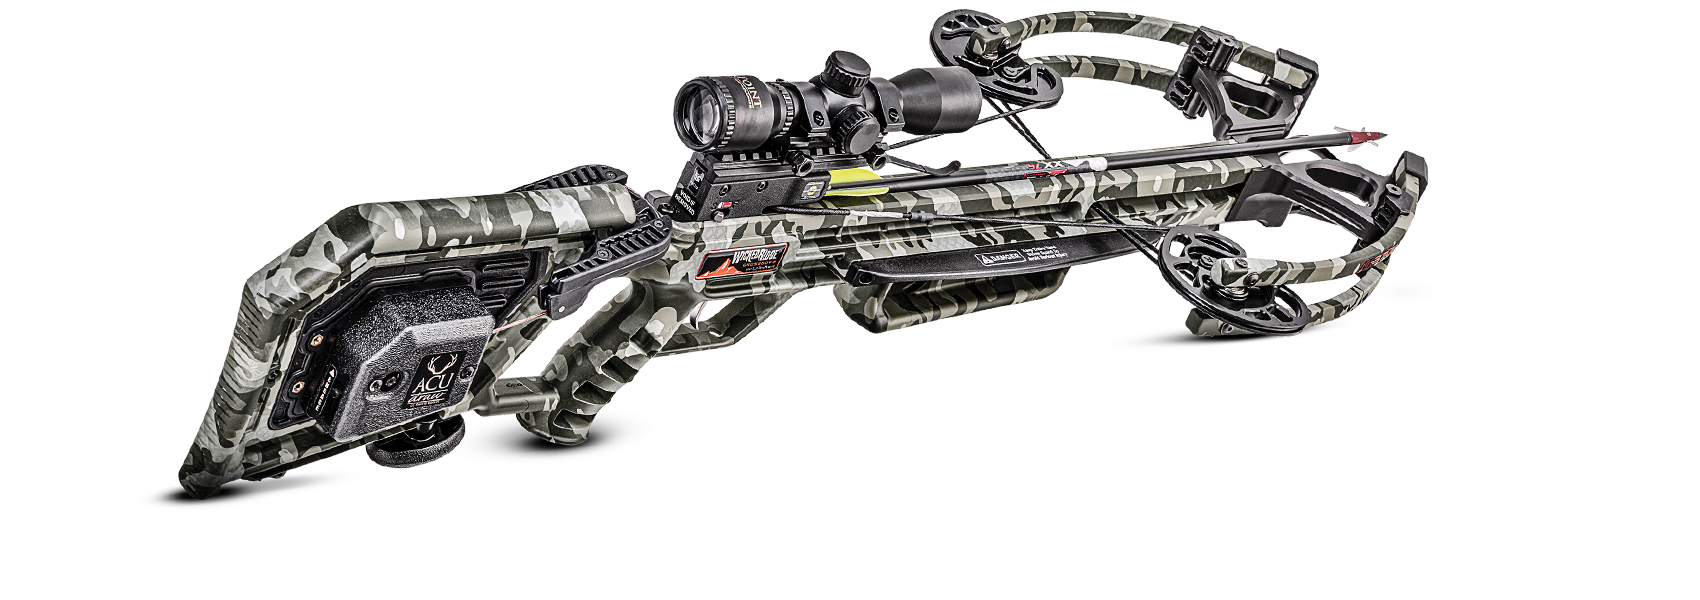 Wicked Ridge M-370 crossbow hunting